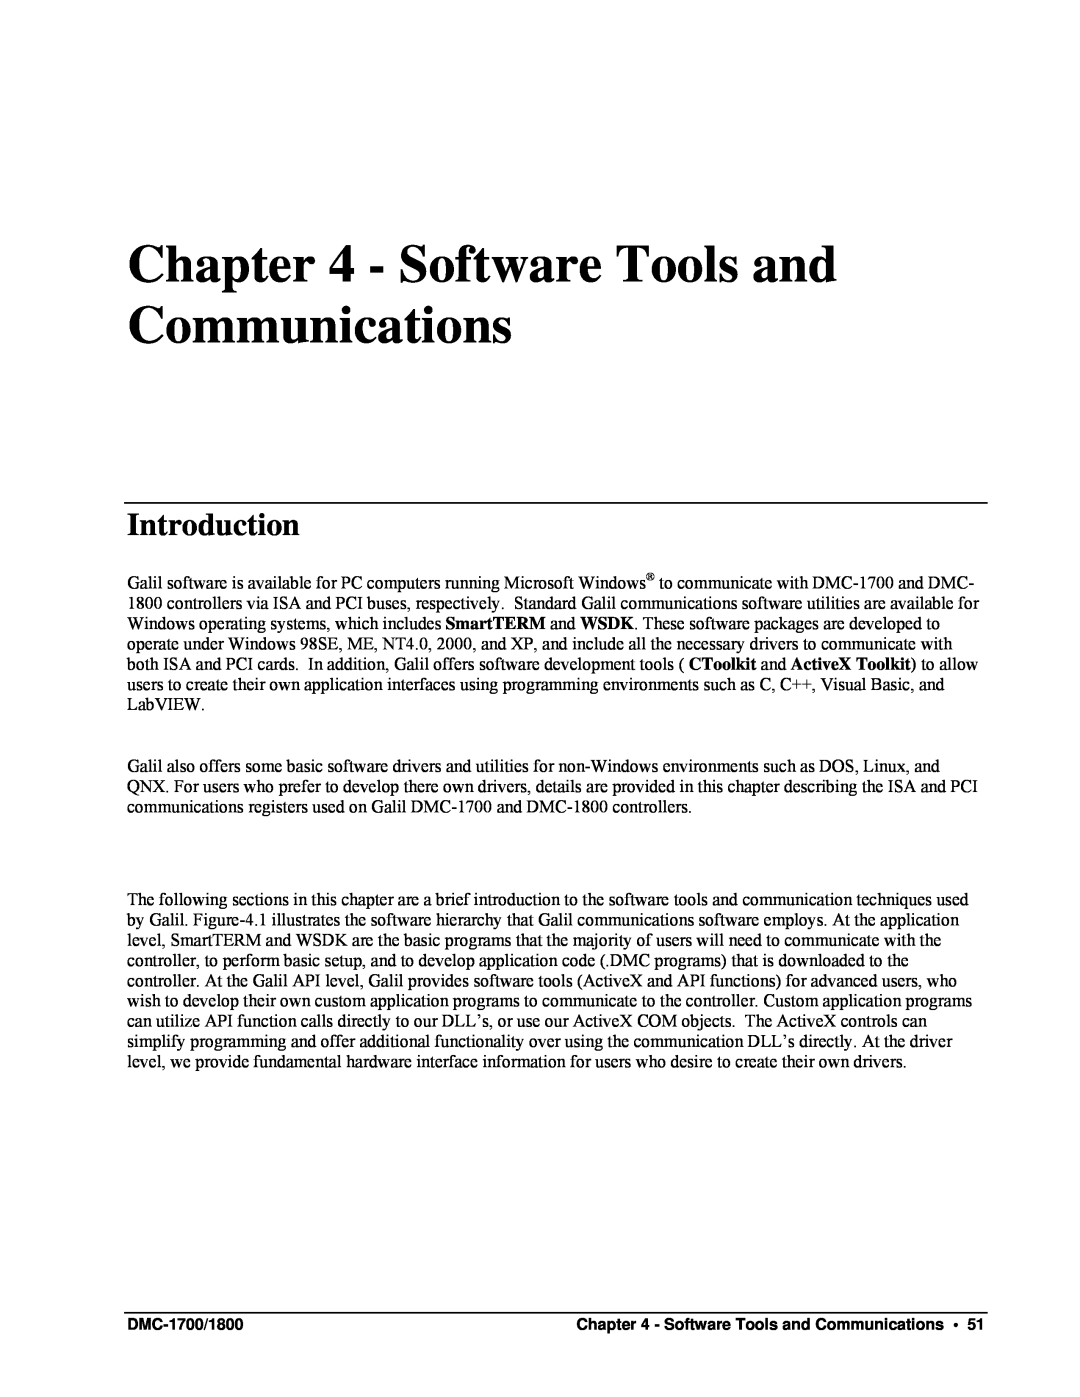 Galil DMC-1800 user manual DMC-1700/1800, Software Tools and Communications • 